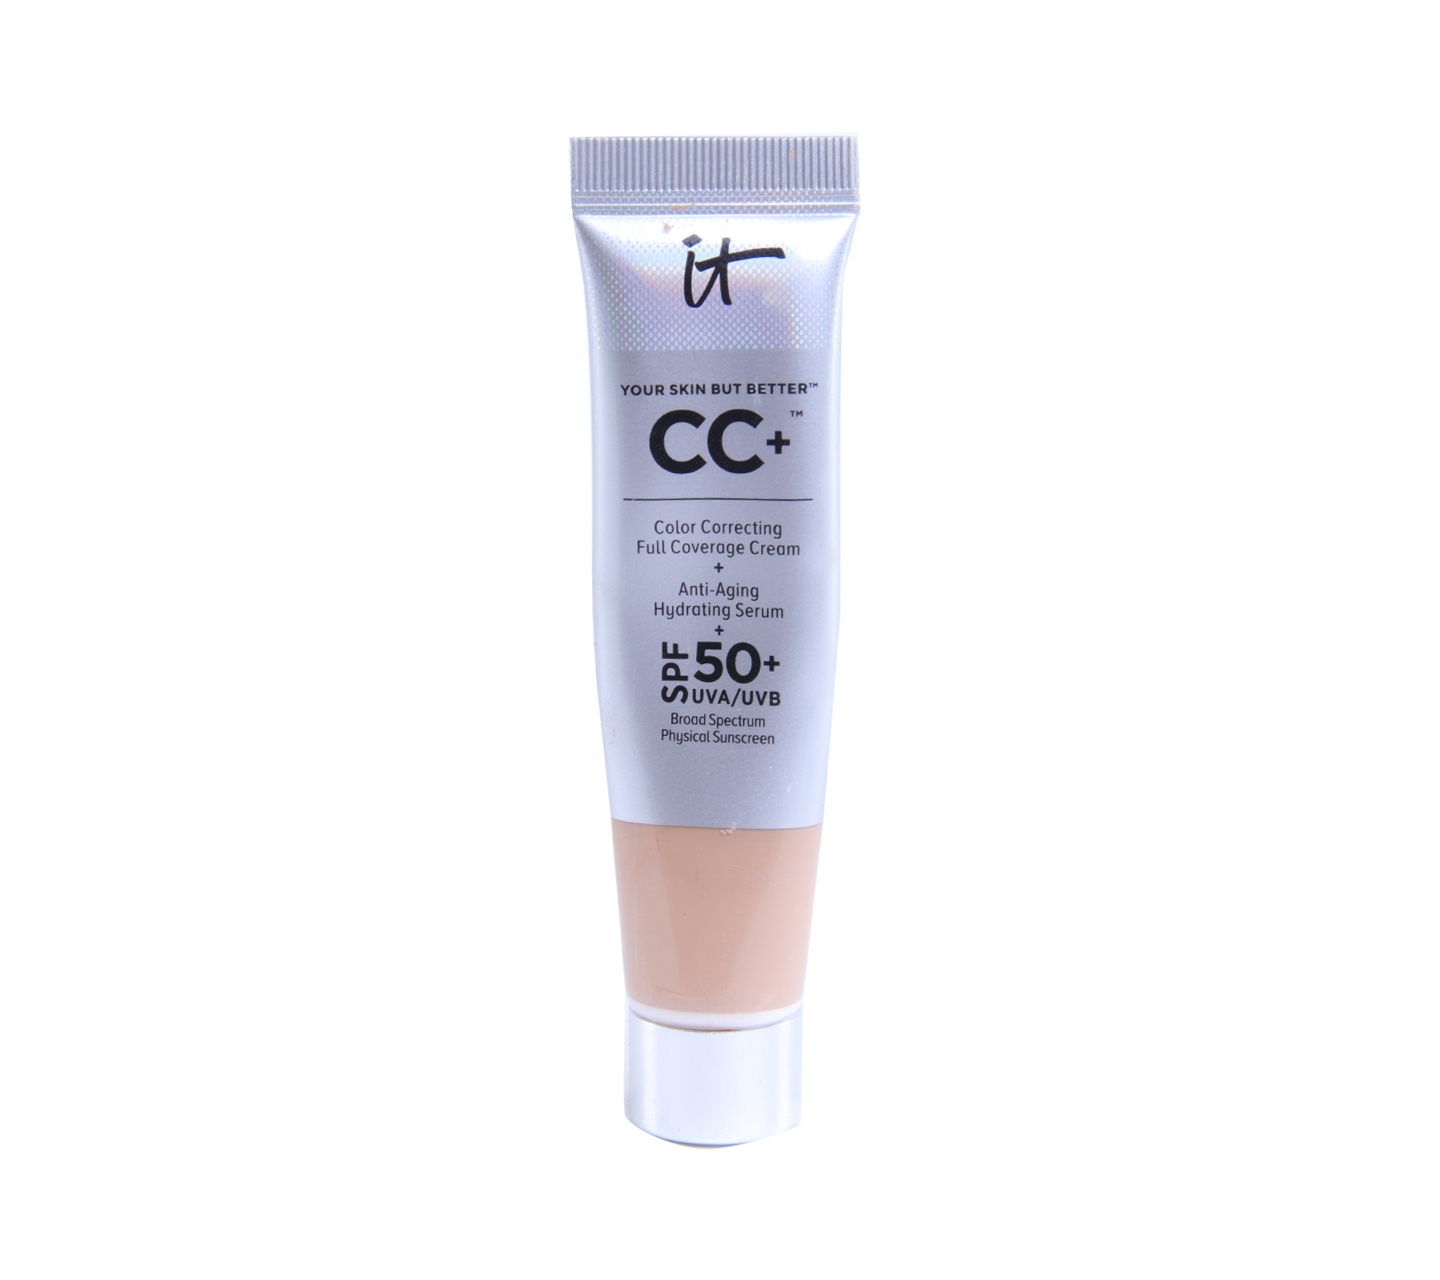 It Cosmetics CC+ Color Correcting Full Coverage Cream Light Faces